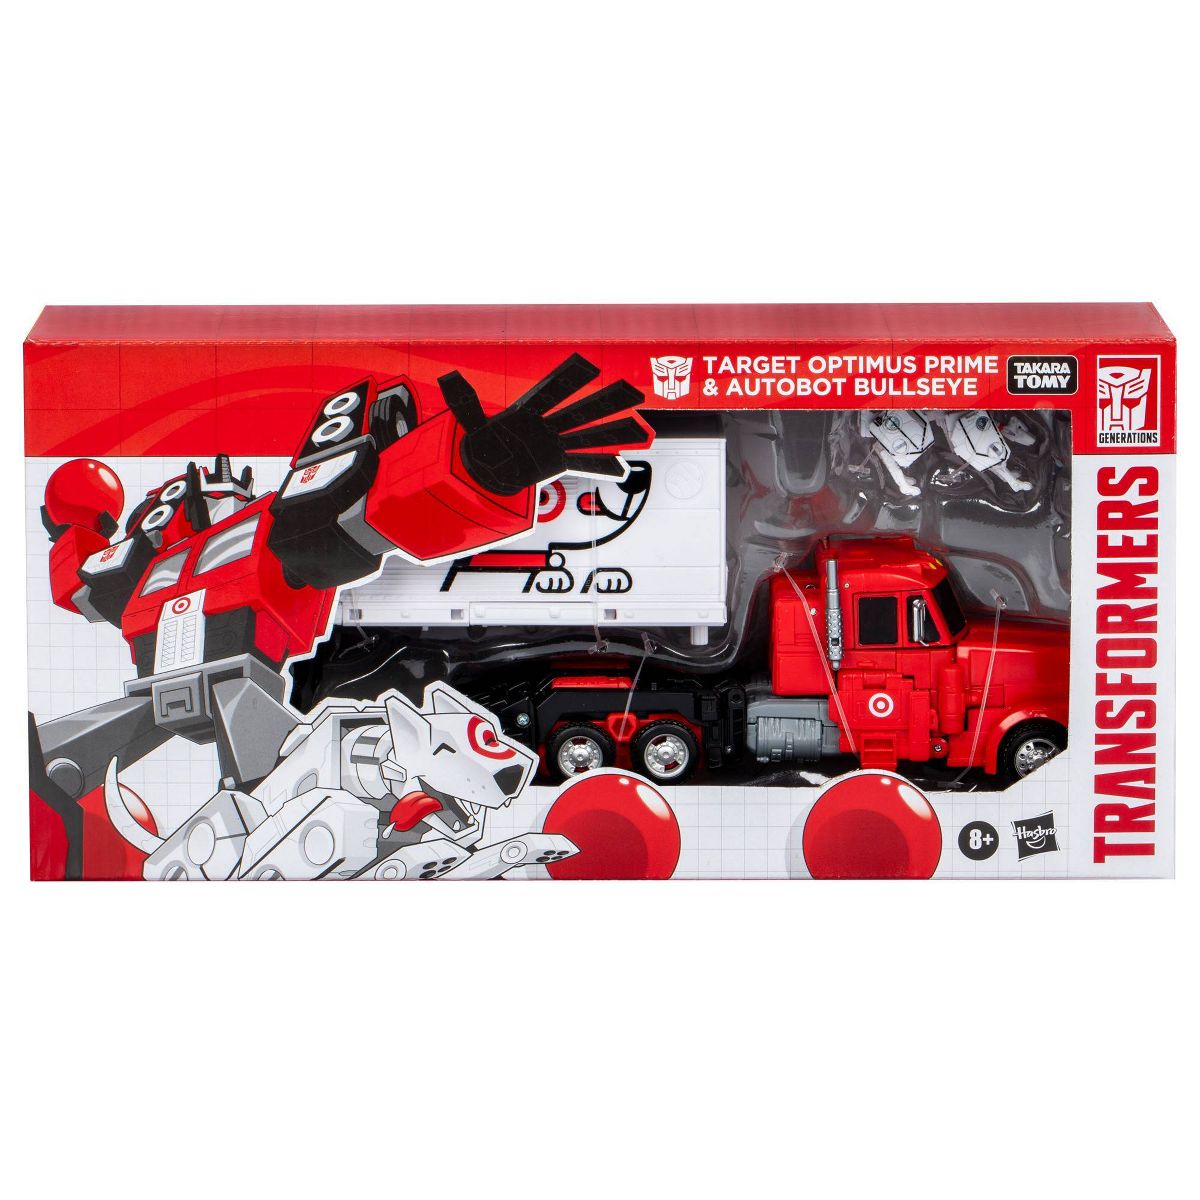 Transformers Target Optimus Prime and Autobot Bullseye Action Figure Set - 2pk (Target Exclusive)